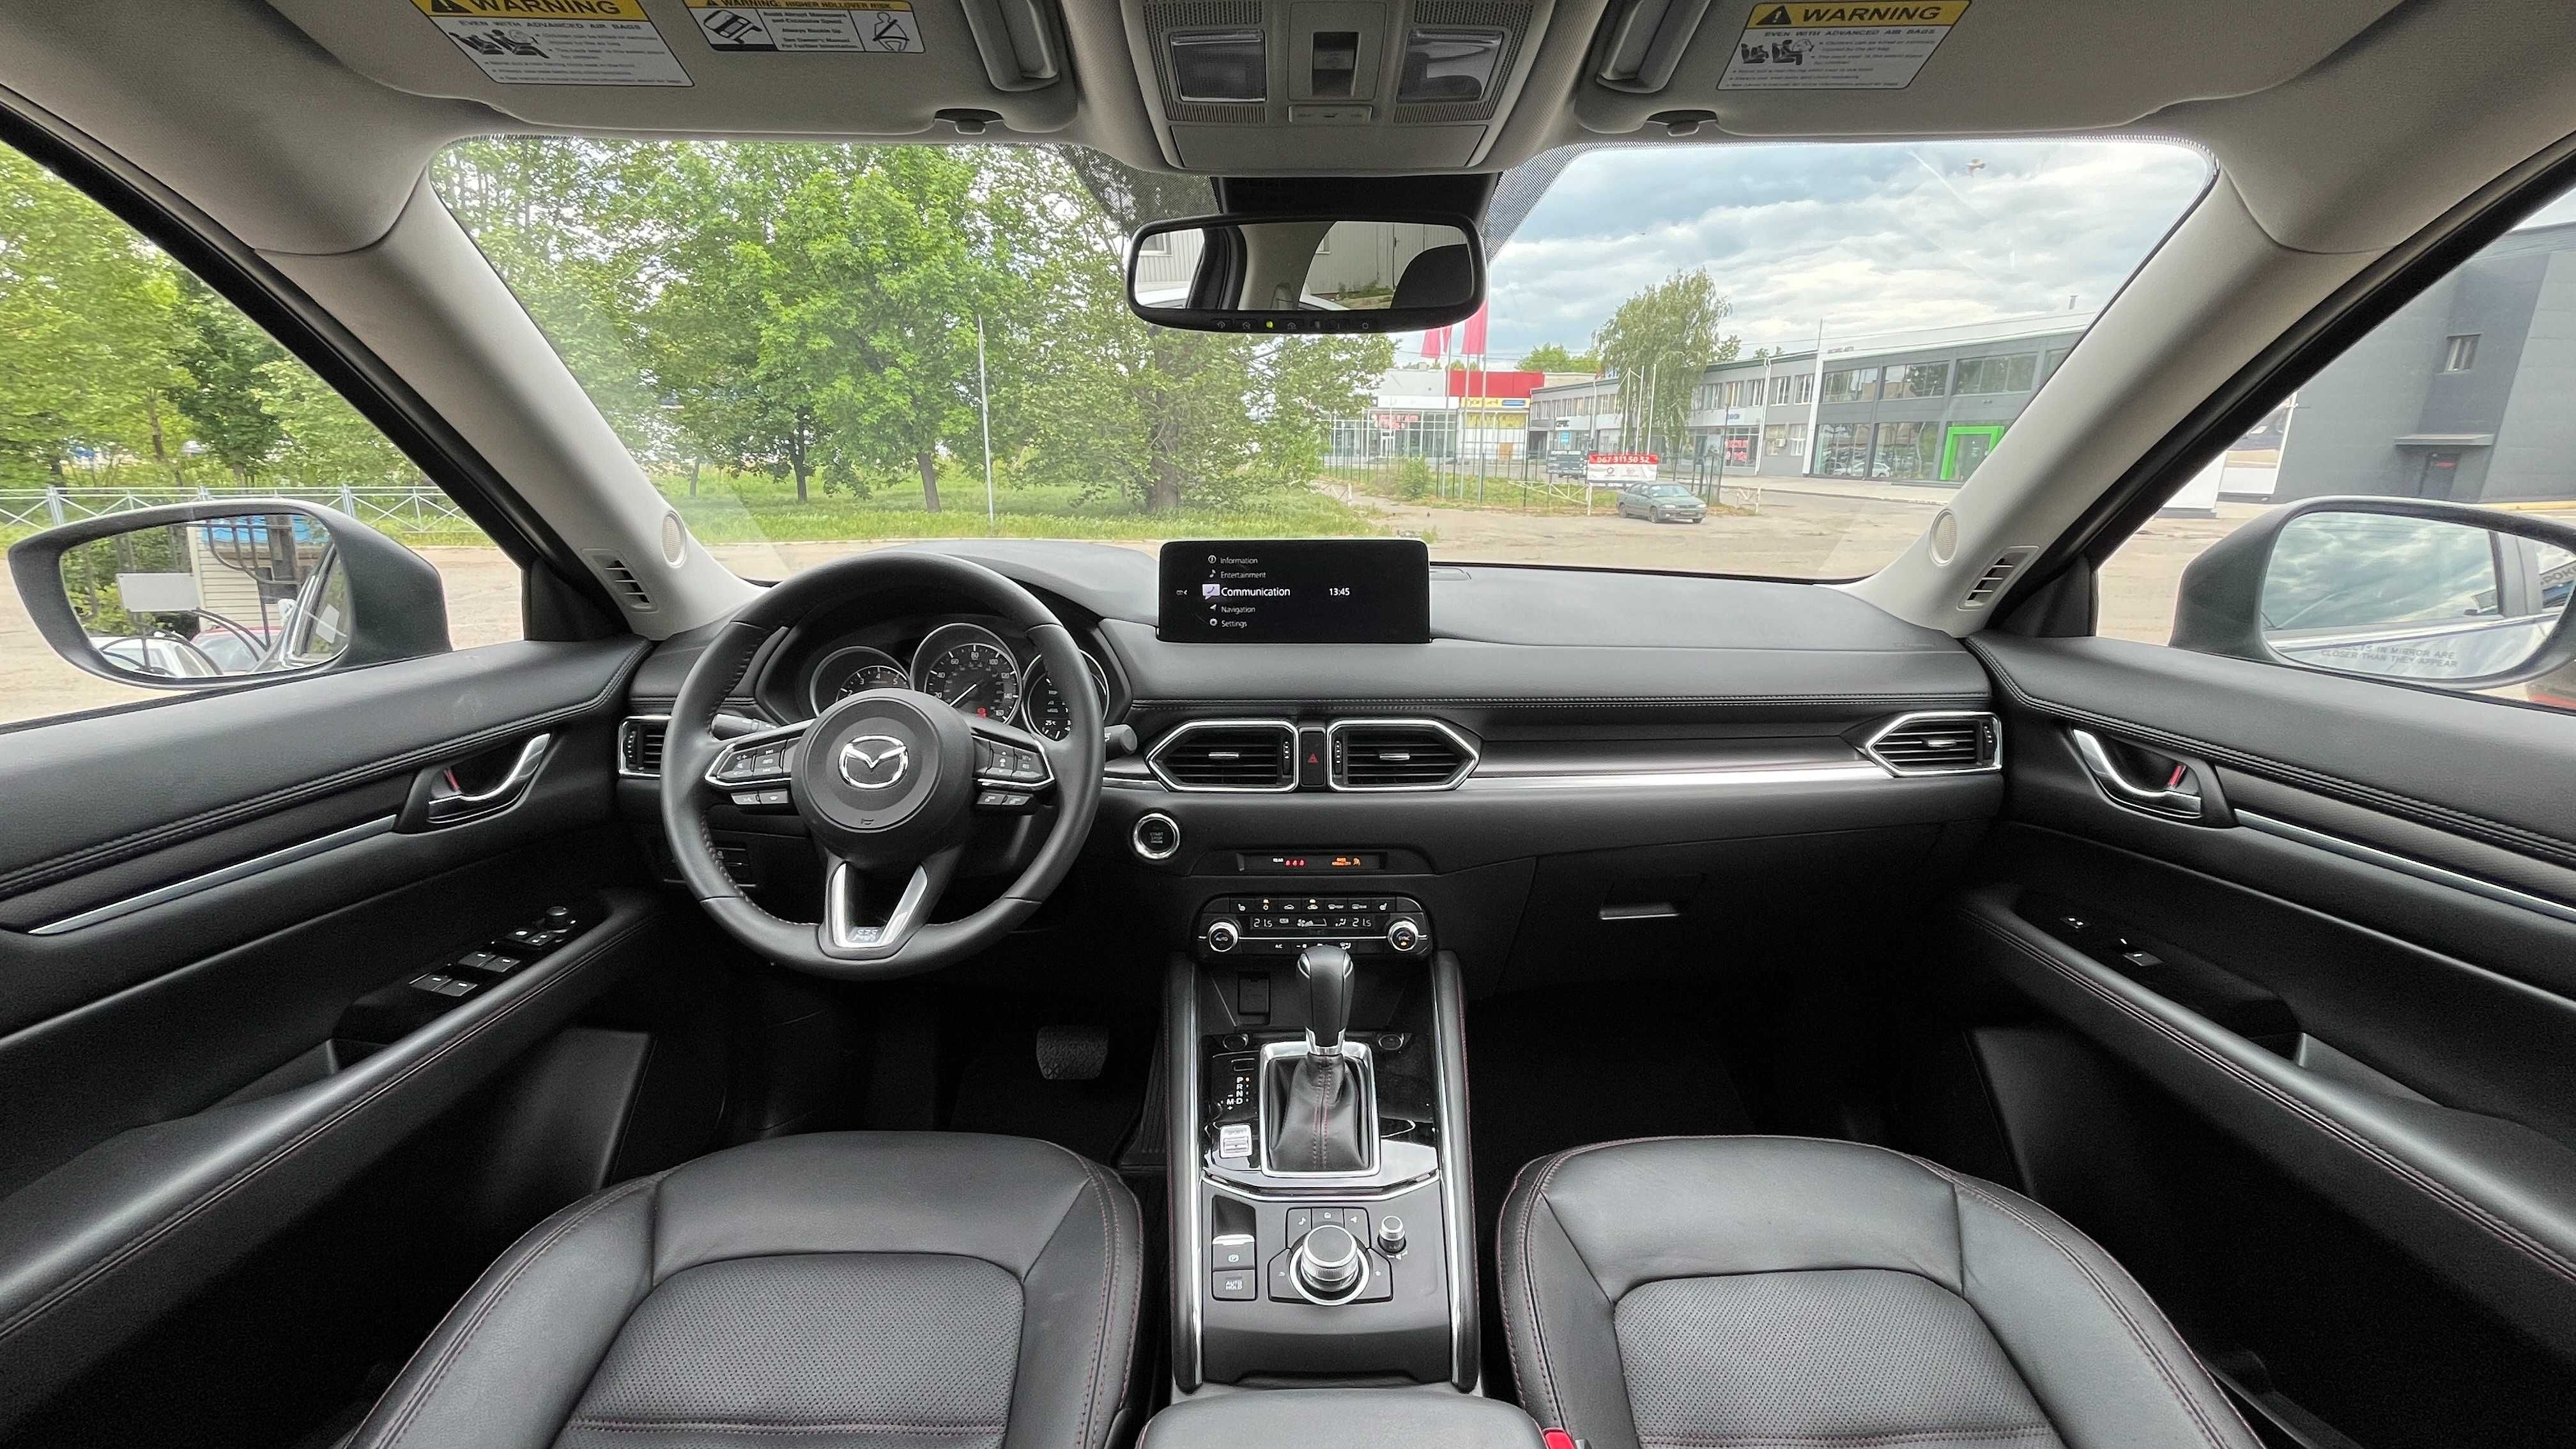 Продам автомобіль Mazda СХ-5 Carbon Edition , 2022 г.